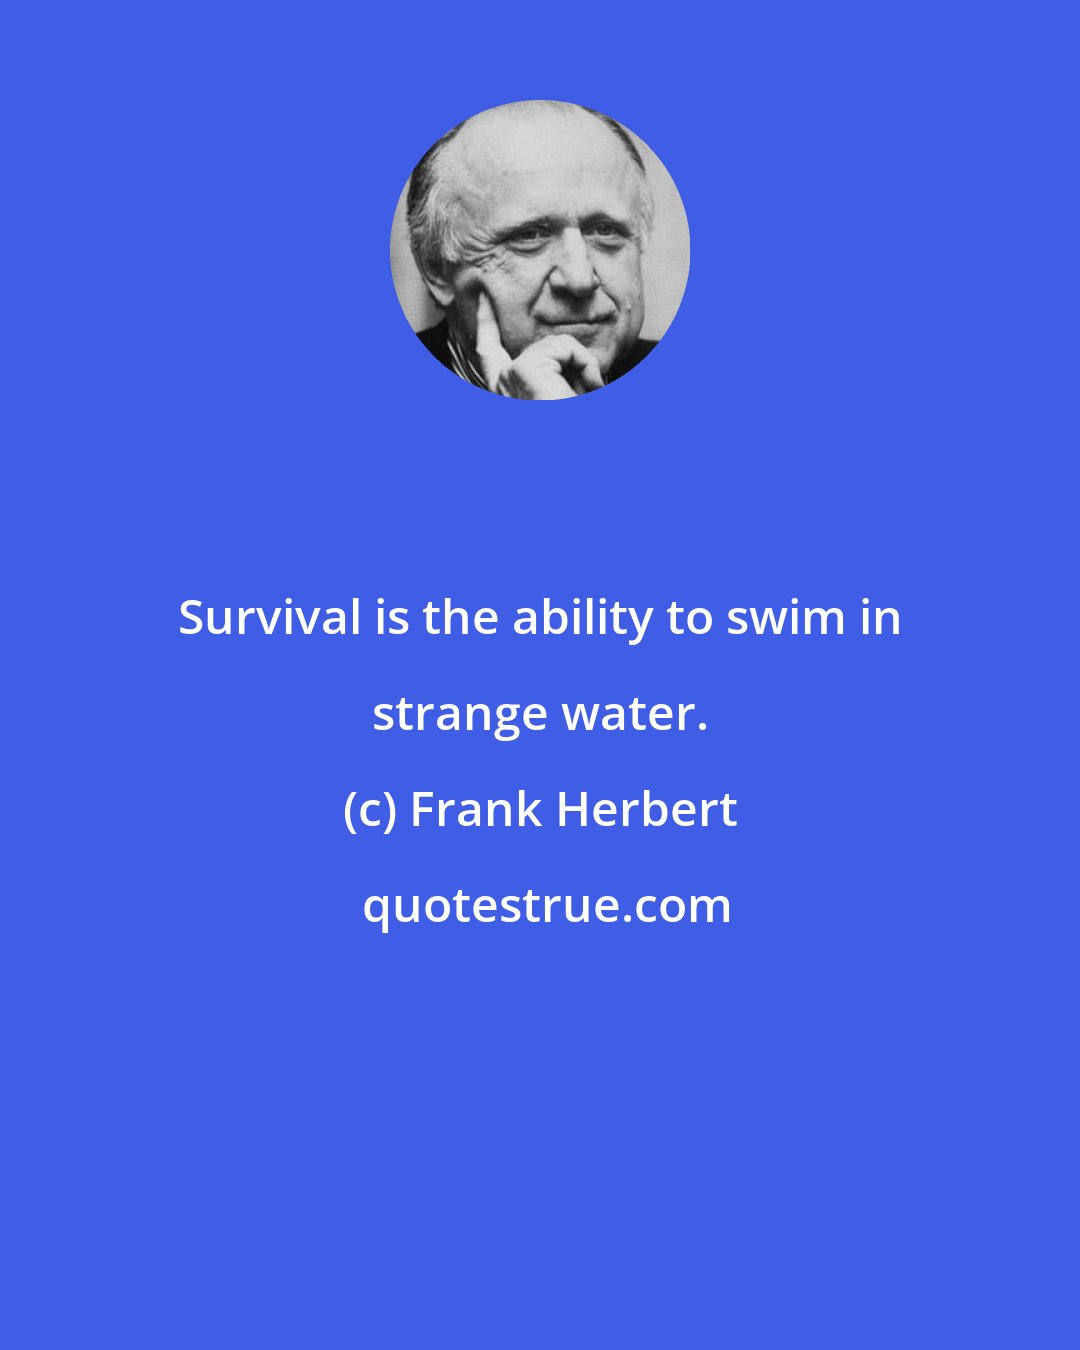 Frank Herbert: Survival is the ability to swim in strange water.